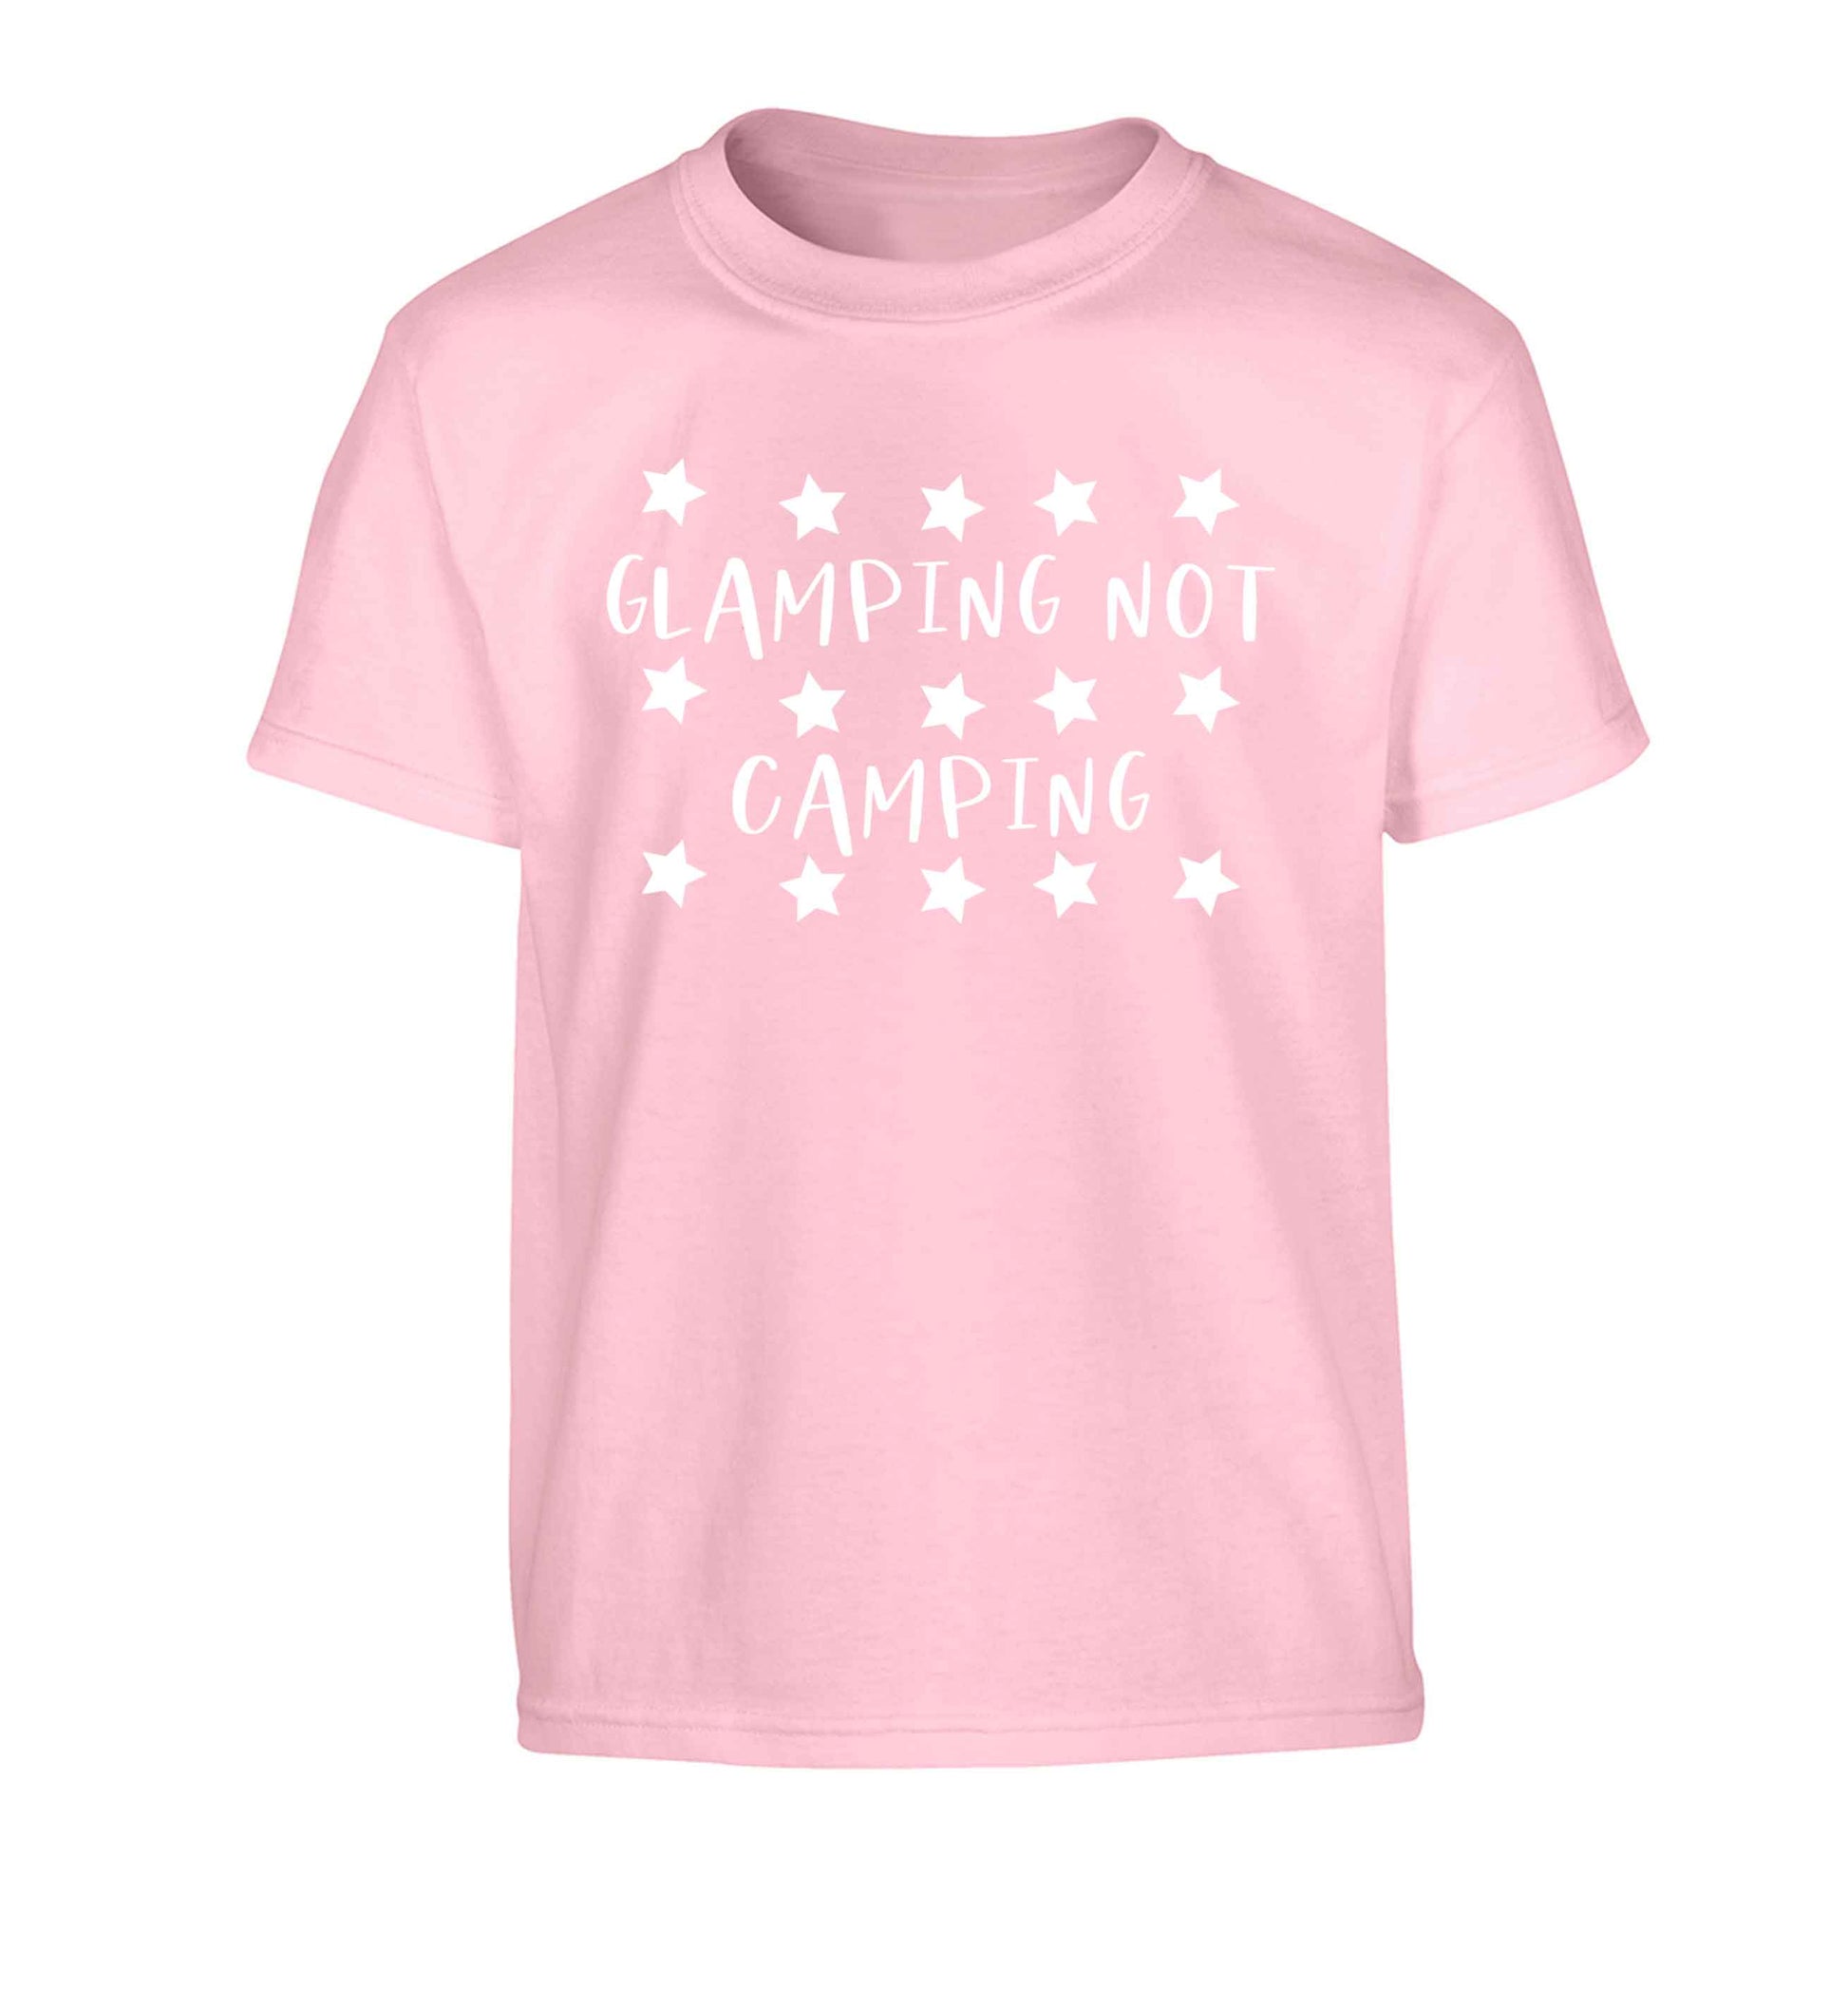 Glamping not camping Children's light pink Tshirt 12-13 Years